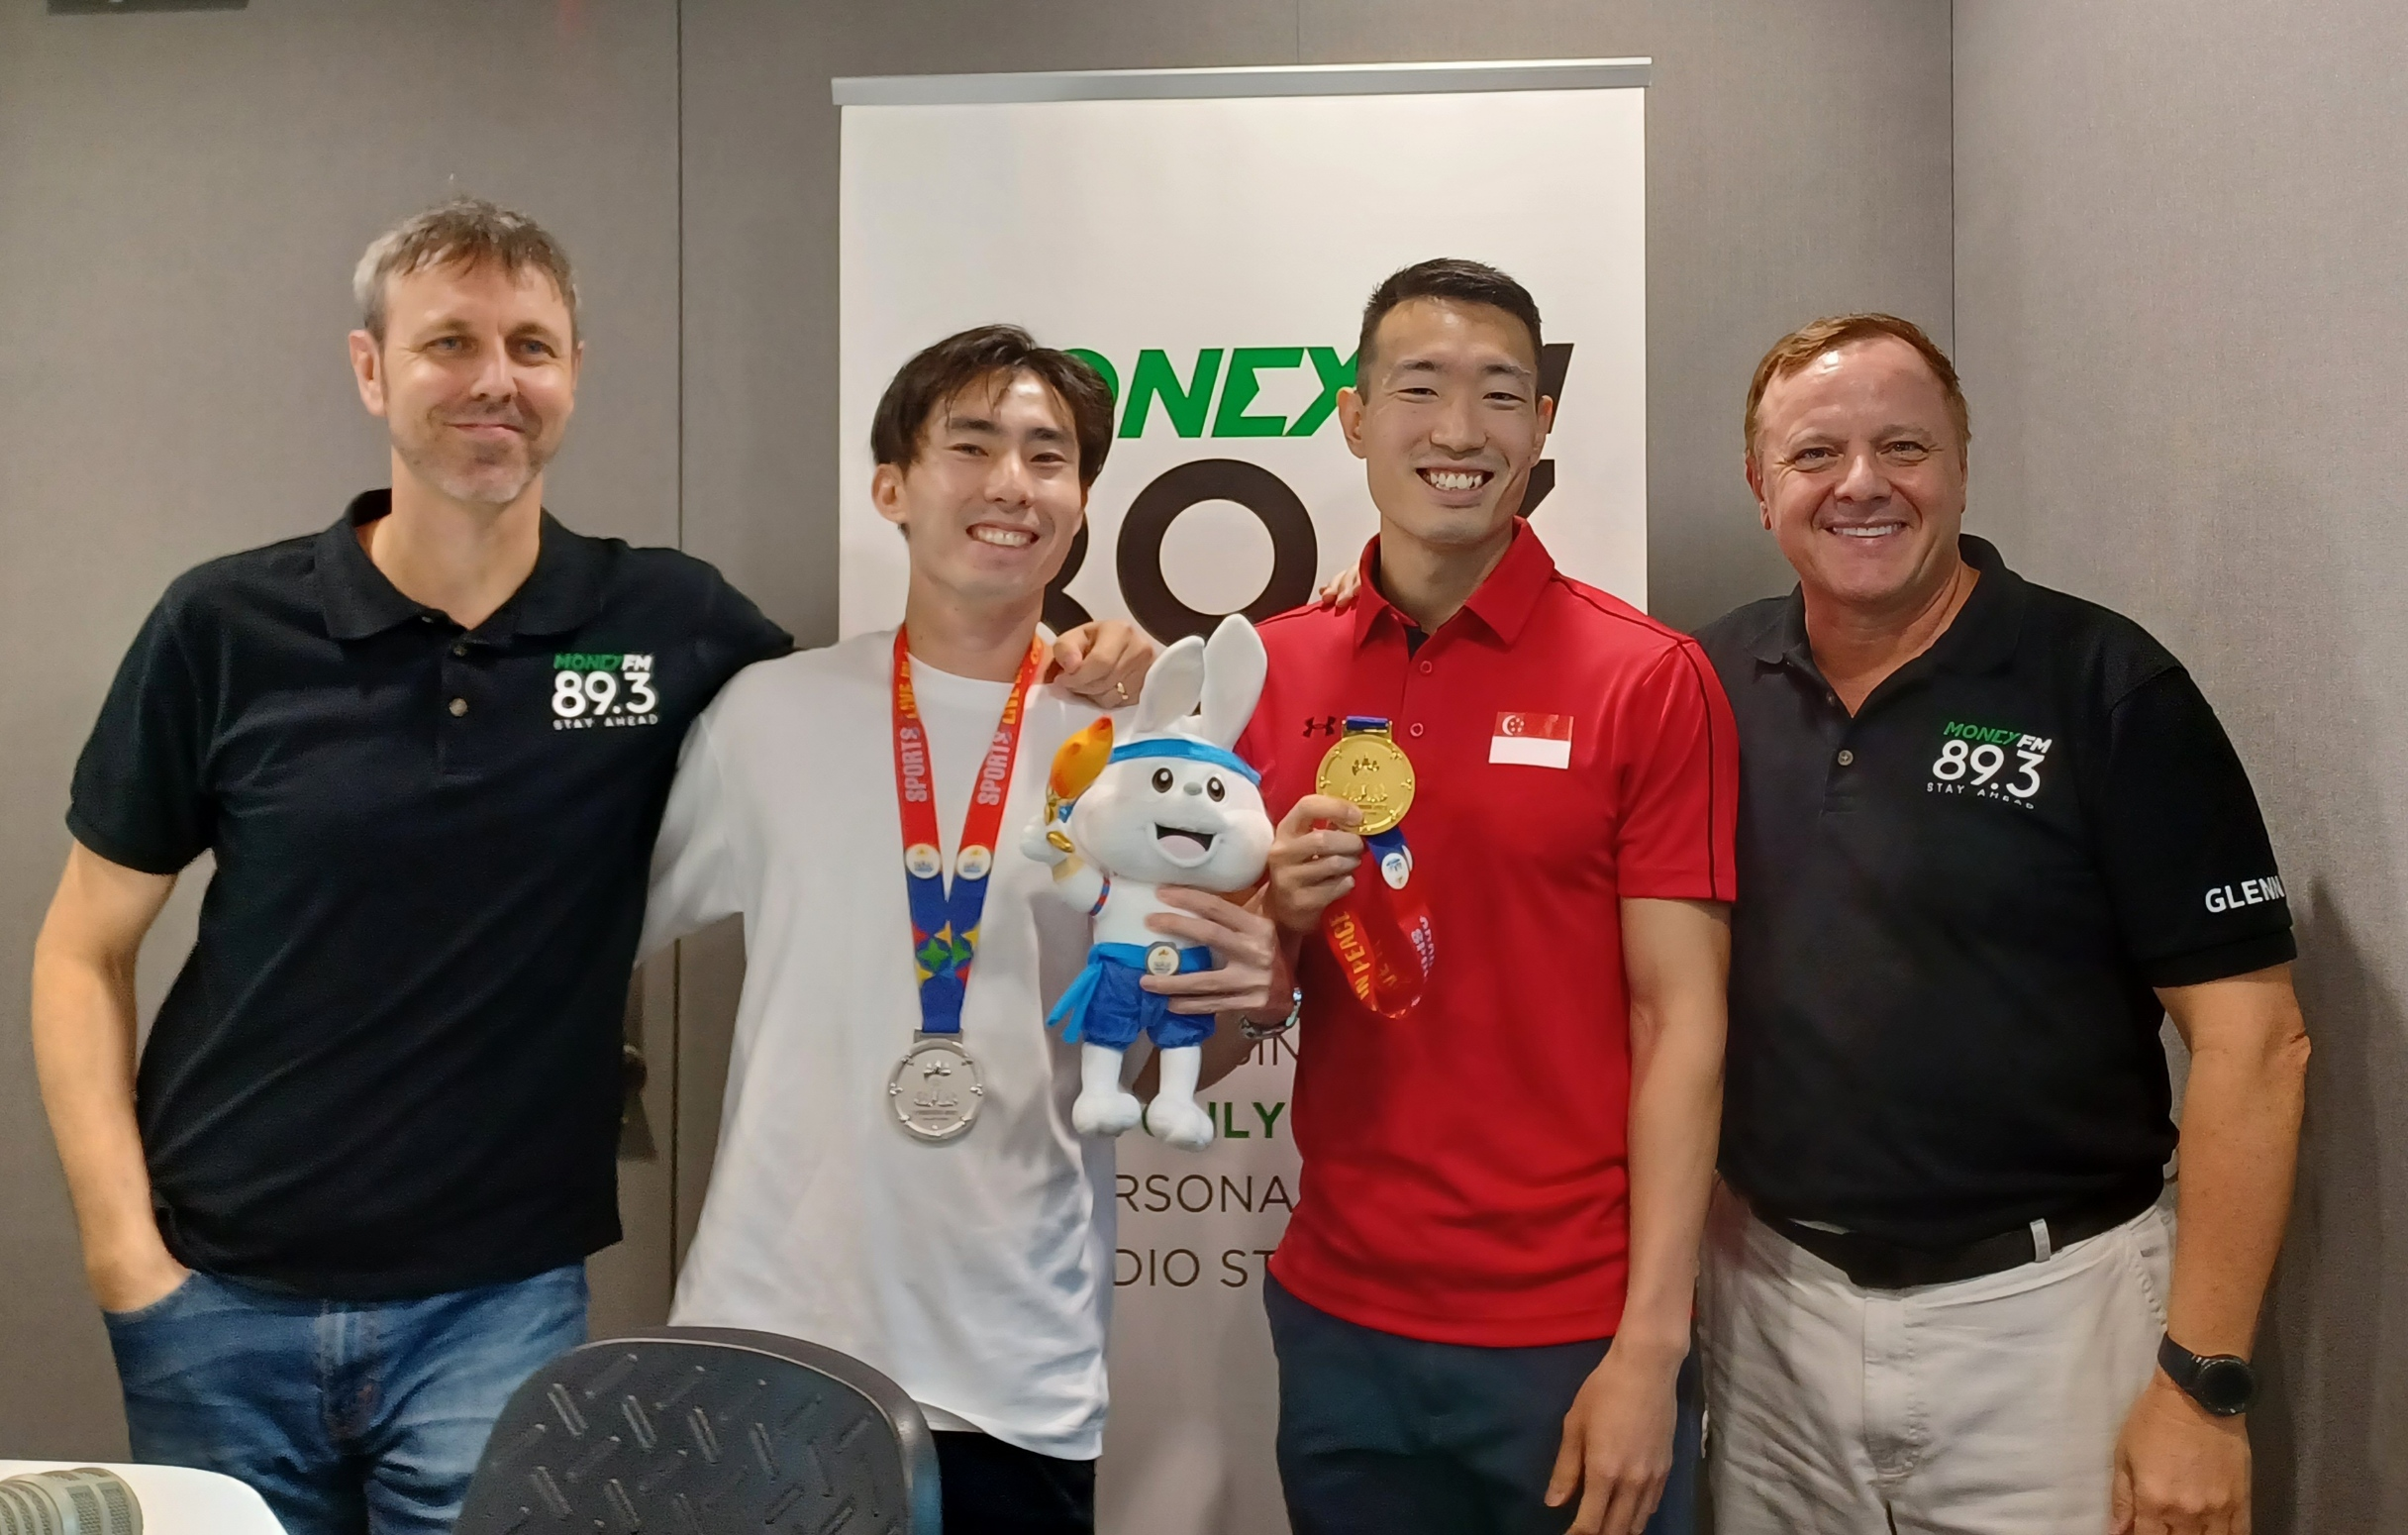 Saturday Mornings: SEA Games Medalists Dr. Ang Chen Xiang and Soh Rui Yong tell us their winning stories